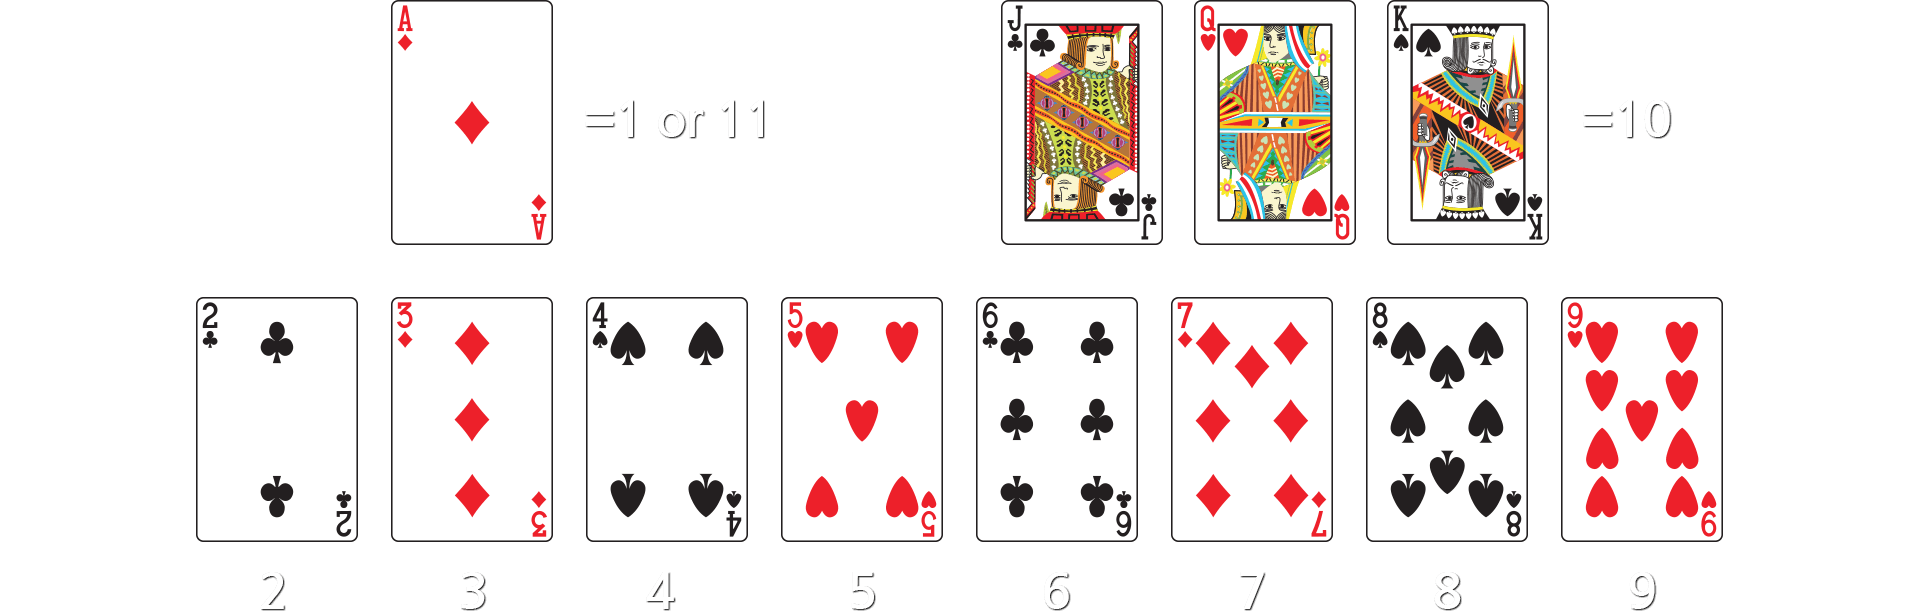 5840-blackjack-rules.png